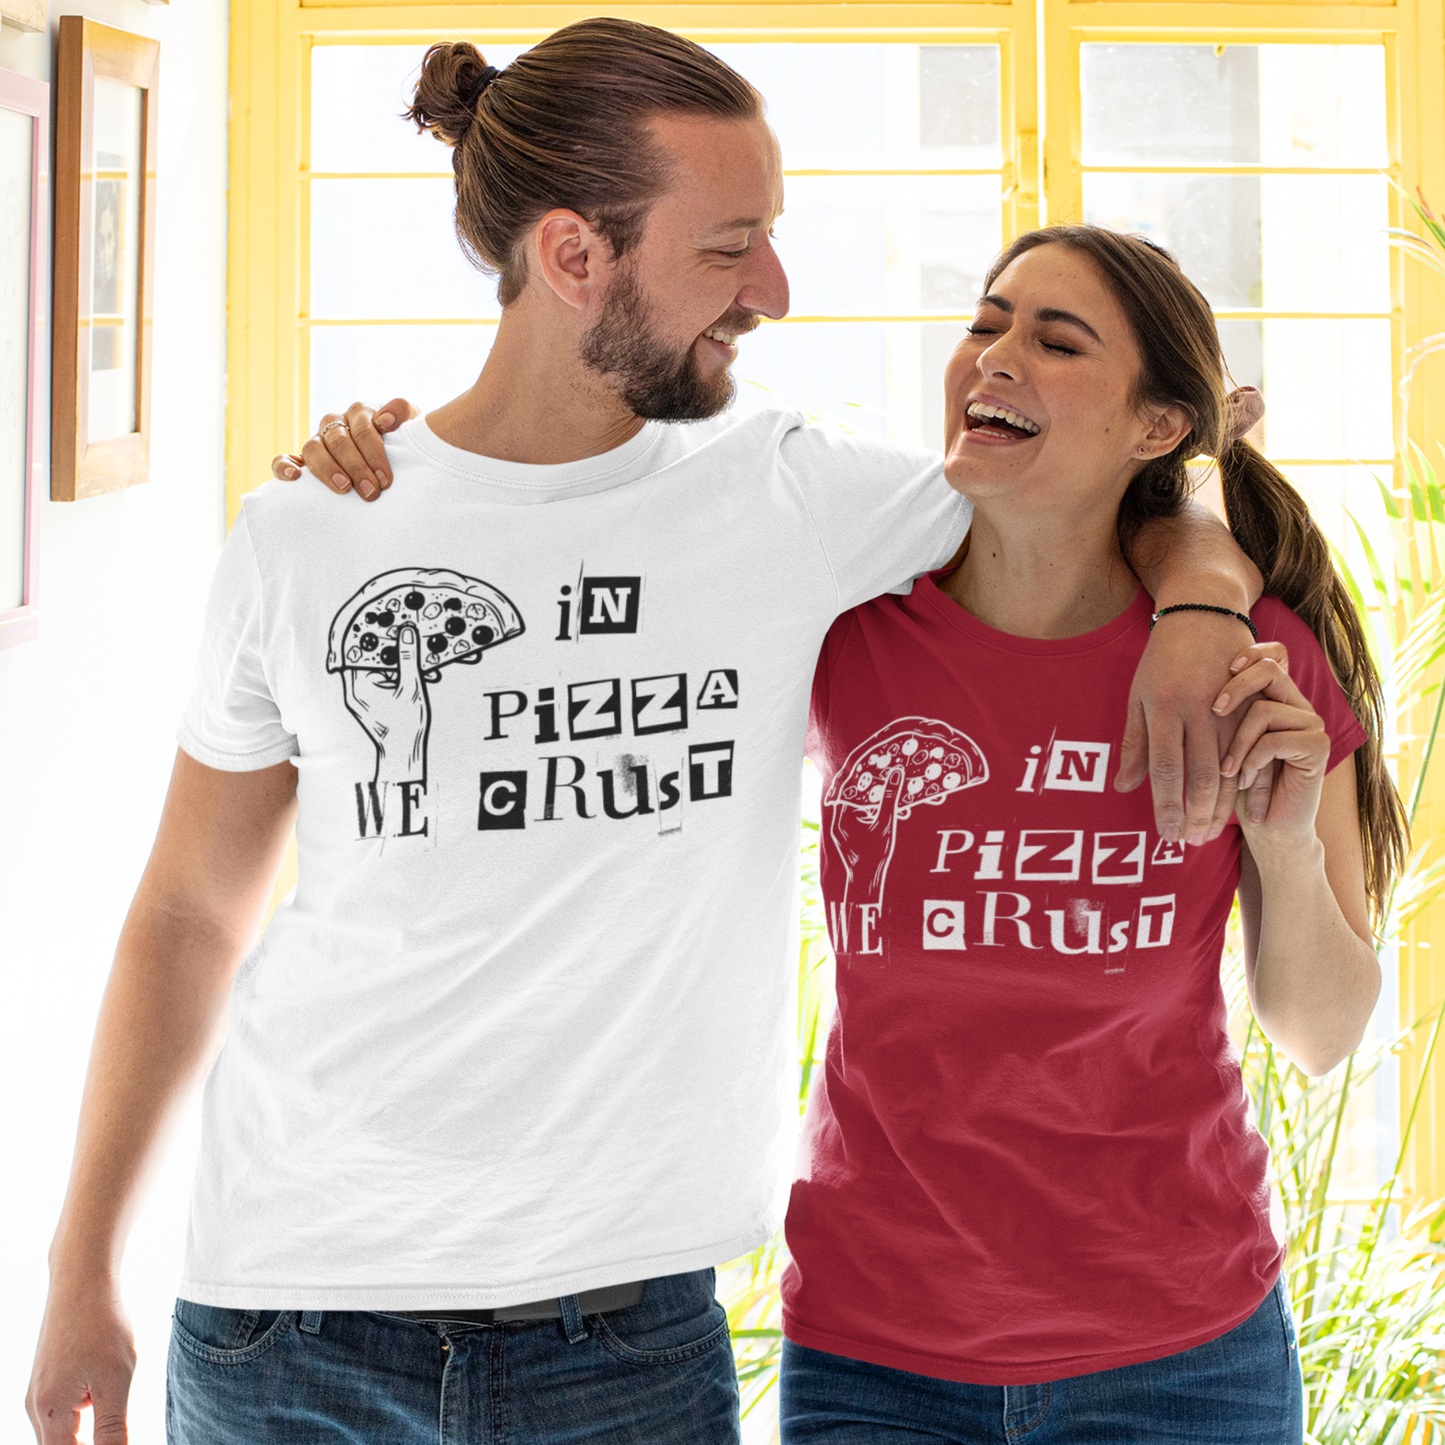 In Pizza We Crust Unisex T-shirt